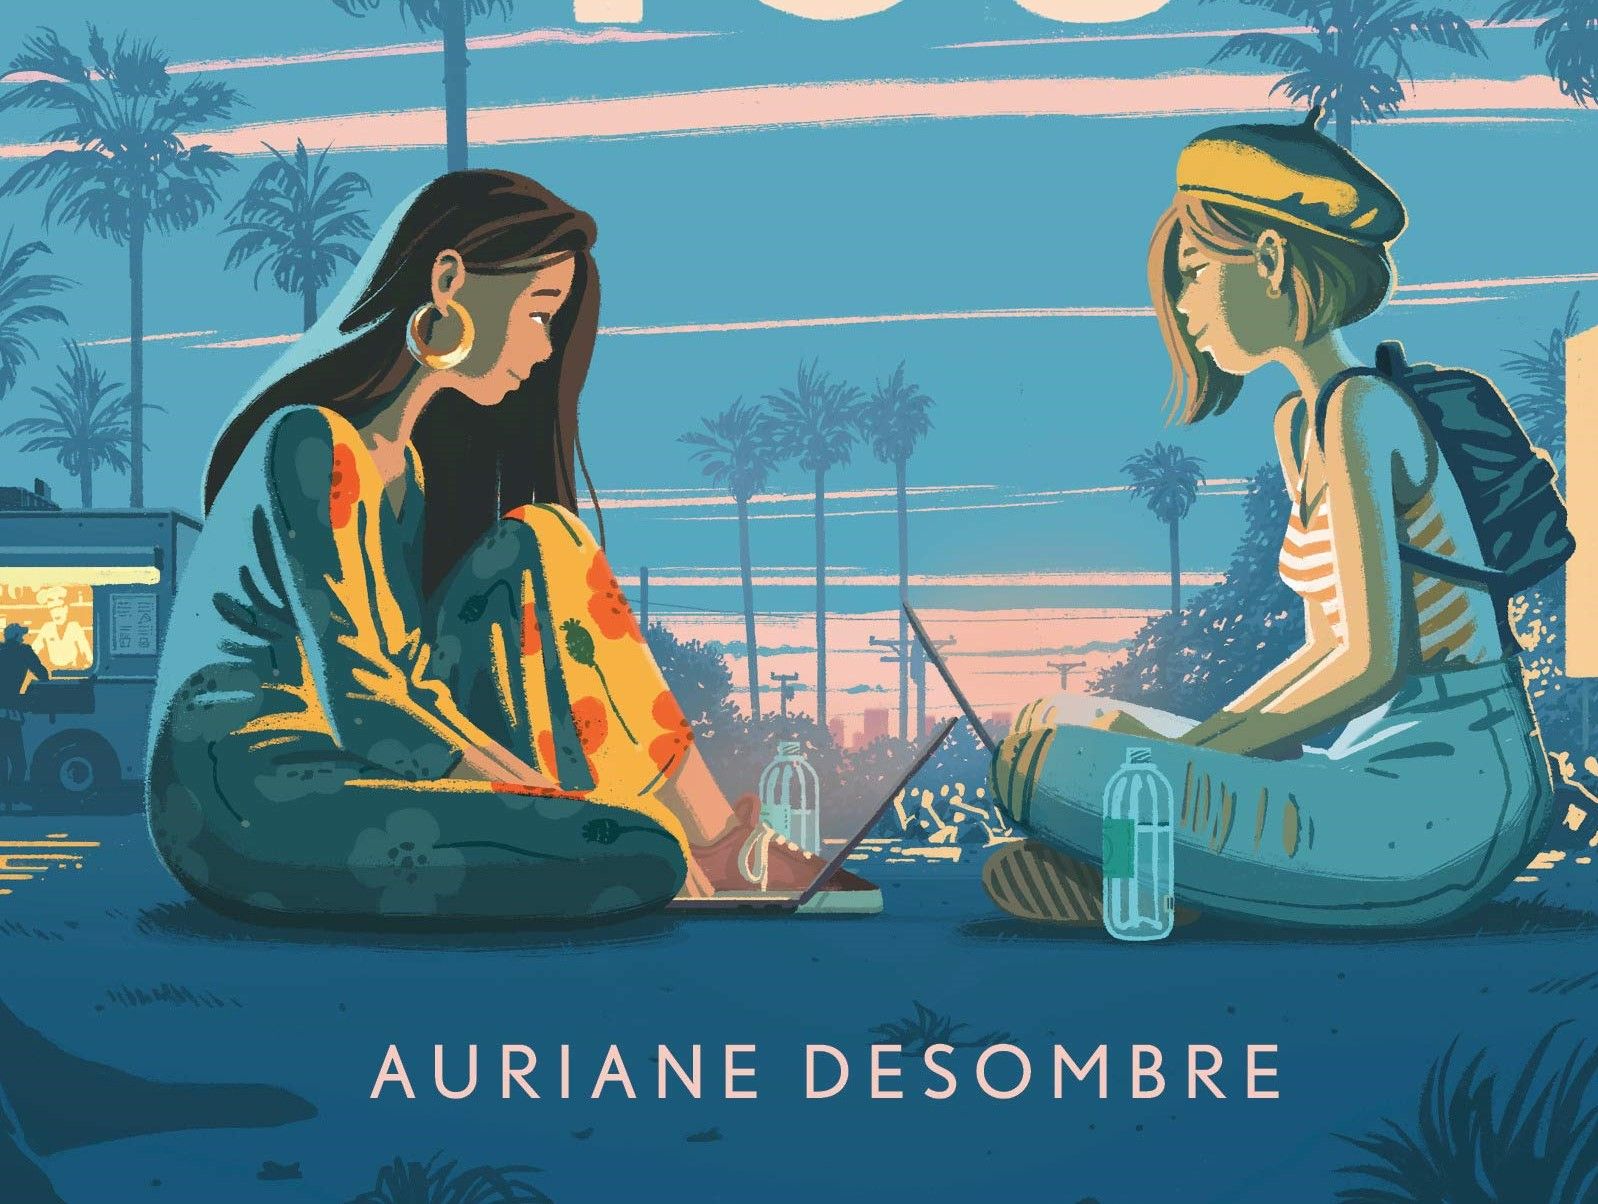 Auriane Desombre'nin I Think I Love You kitabının kapağı.